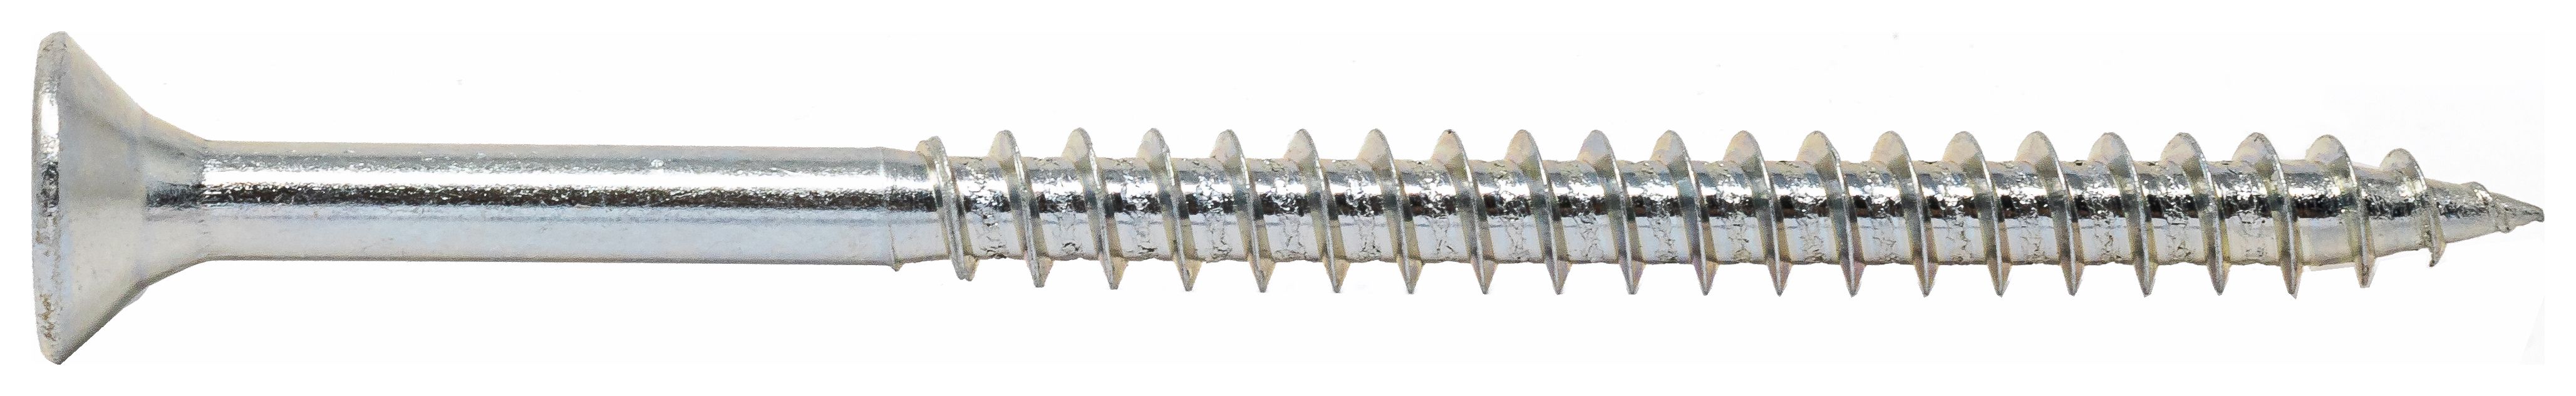 Wickes Single Thread Zinc Plated Screw - 5 X 100mm Pack Of 100